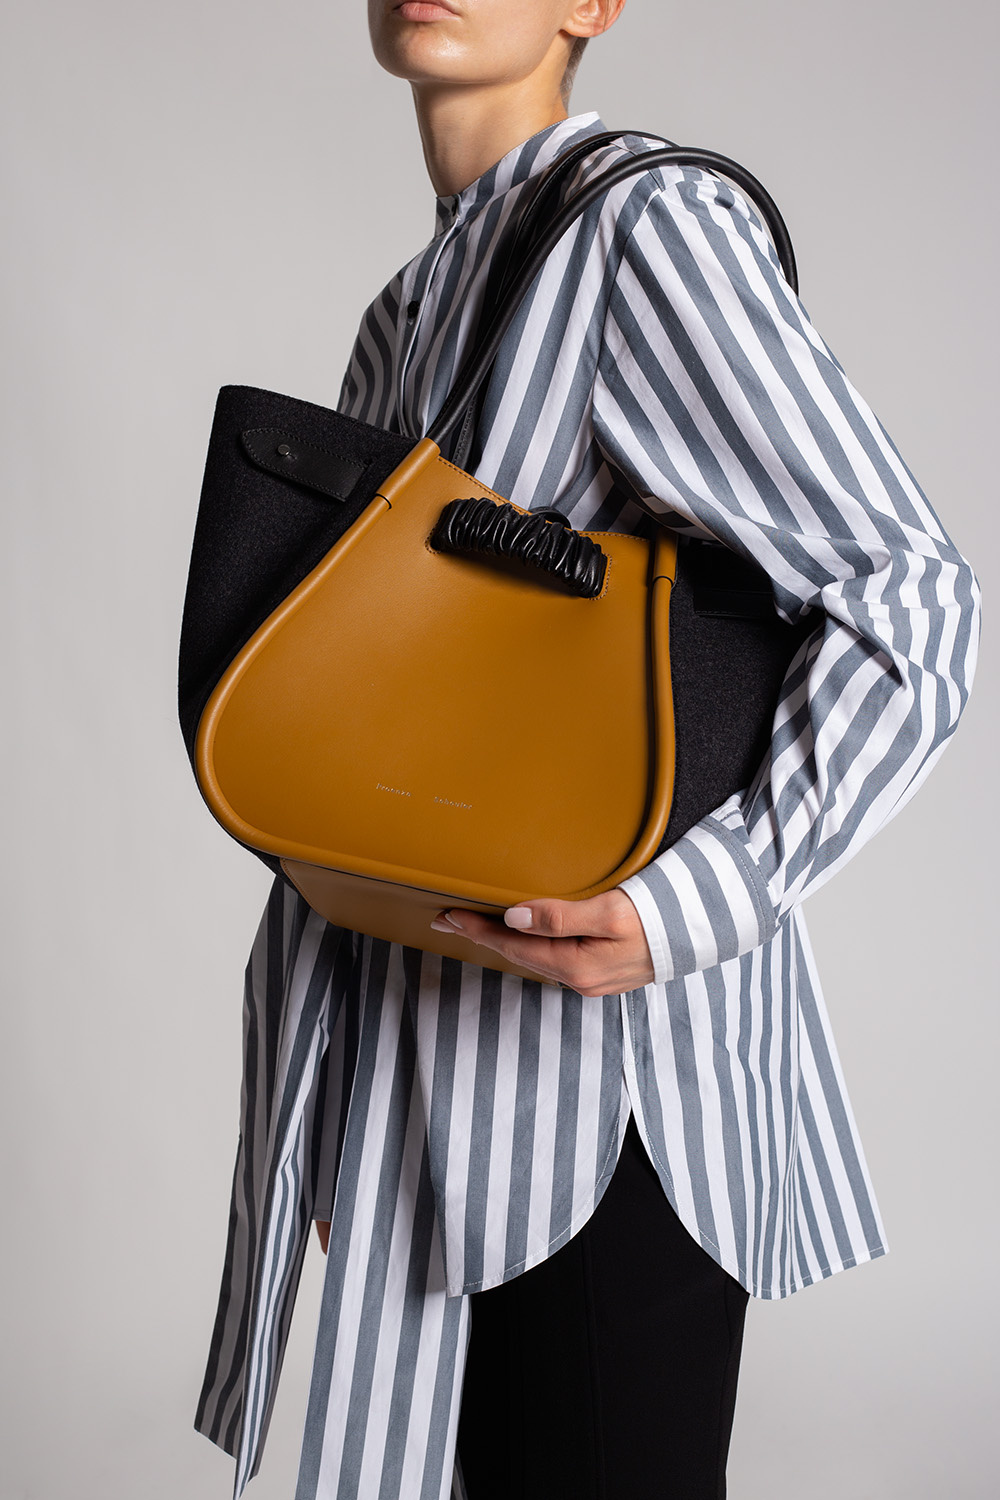 proenza iris-painted Schouler ‘Ruched Large’ shopper bag